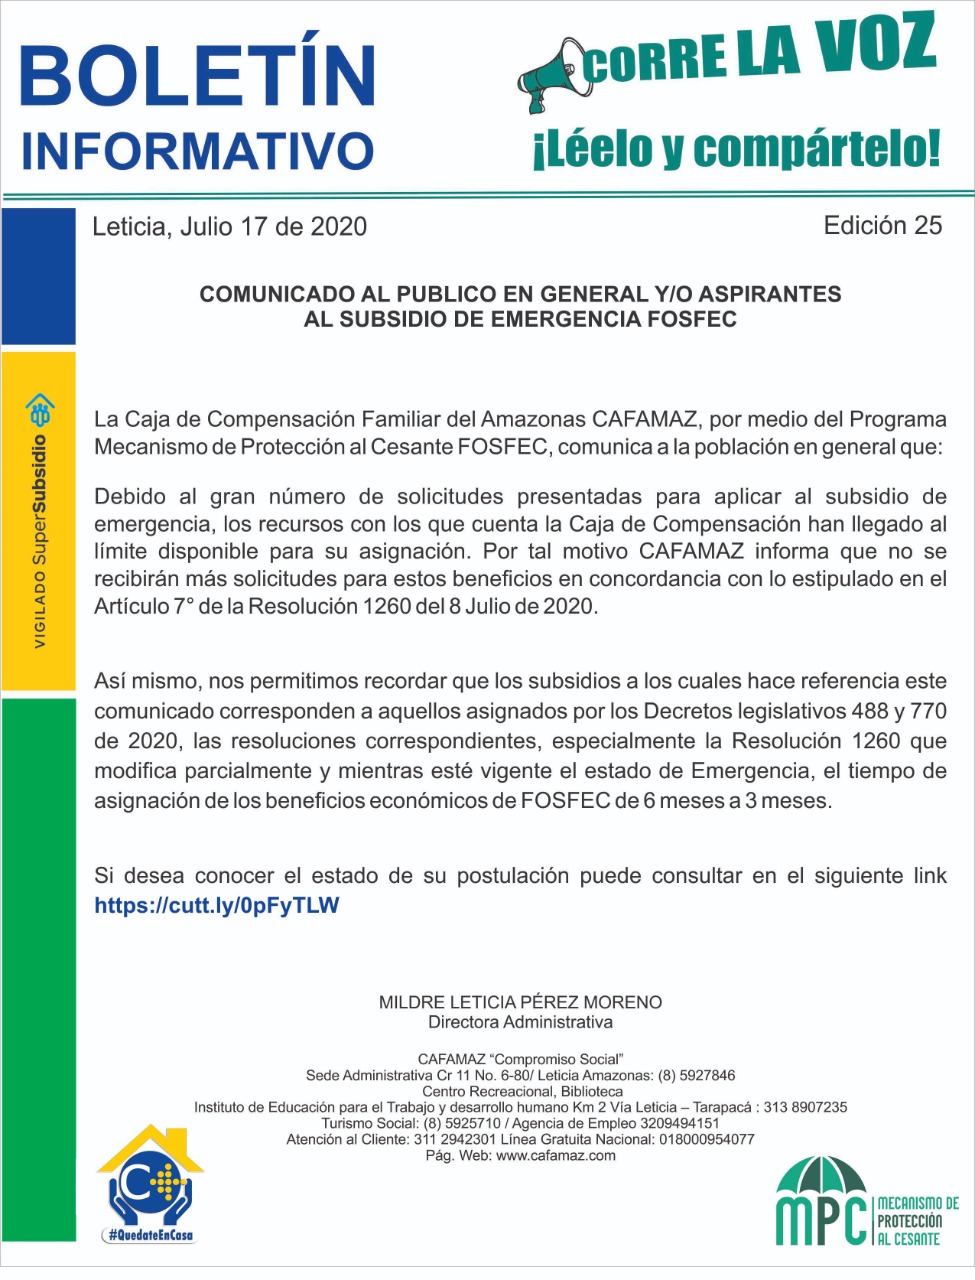 Boletín Informativo Edición 25 | Cafamaz, 2020